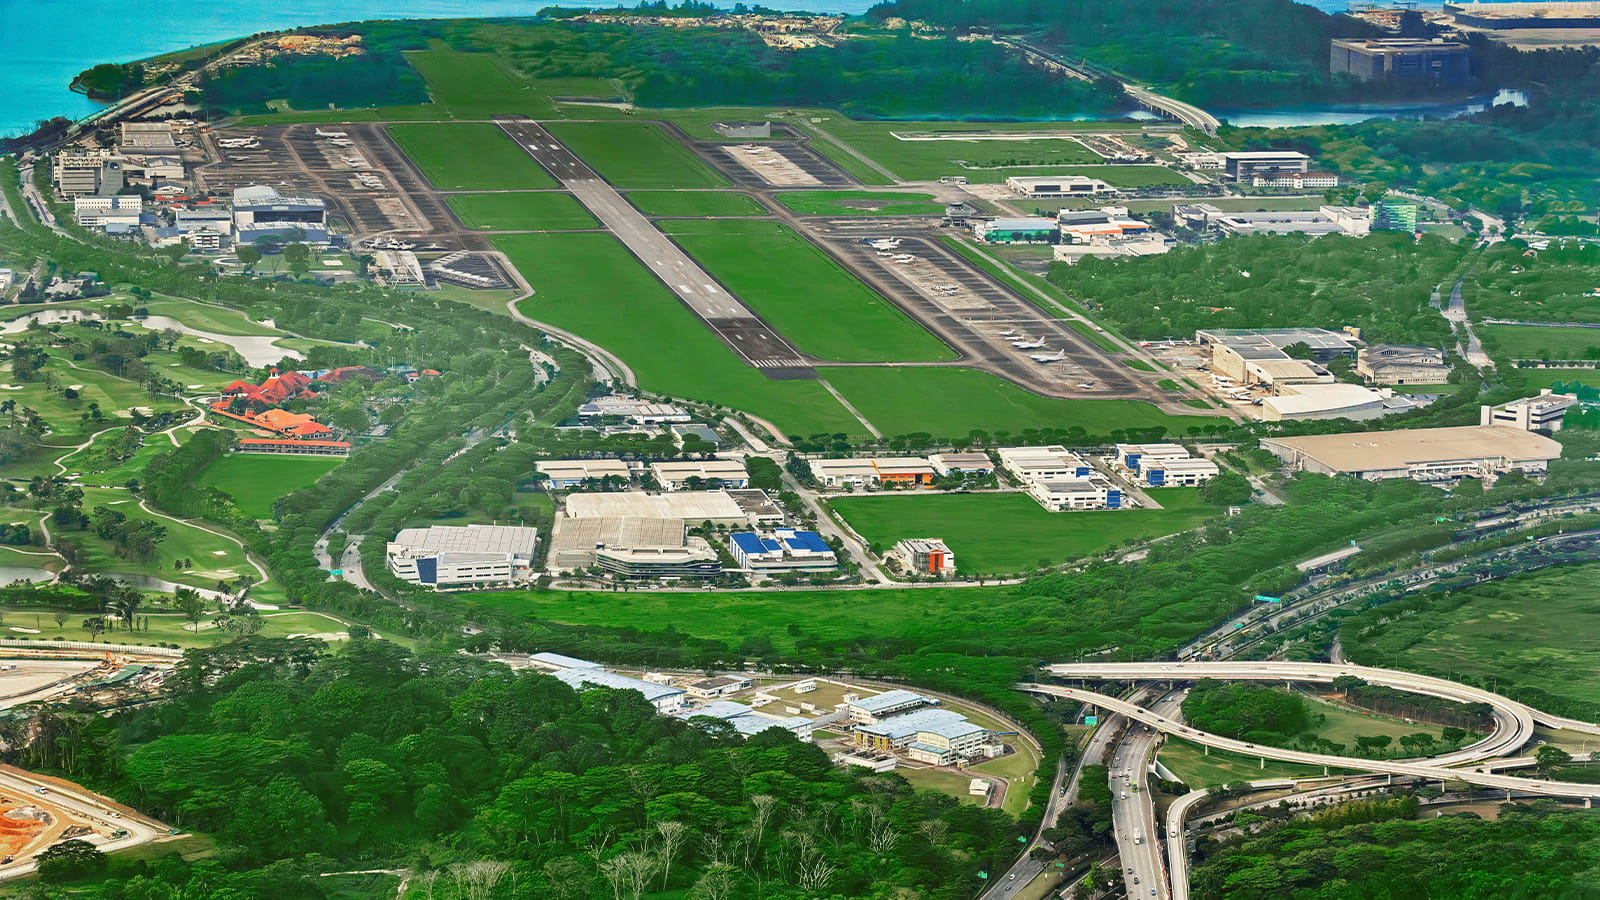 An aerial view of Seletar Aerospace Park, Singapore.